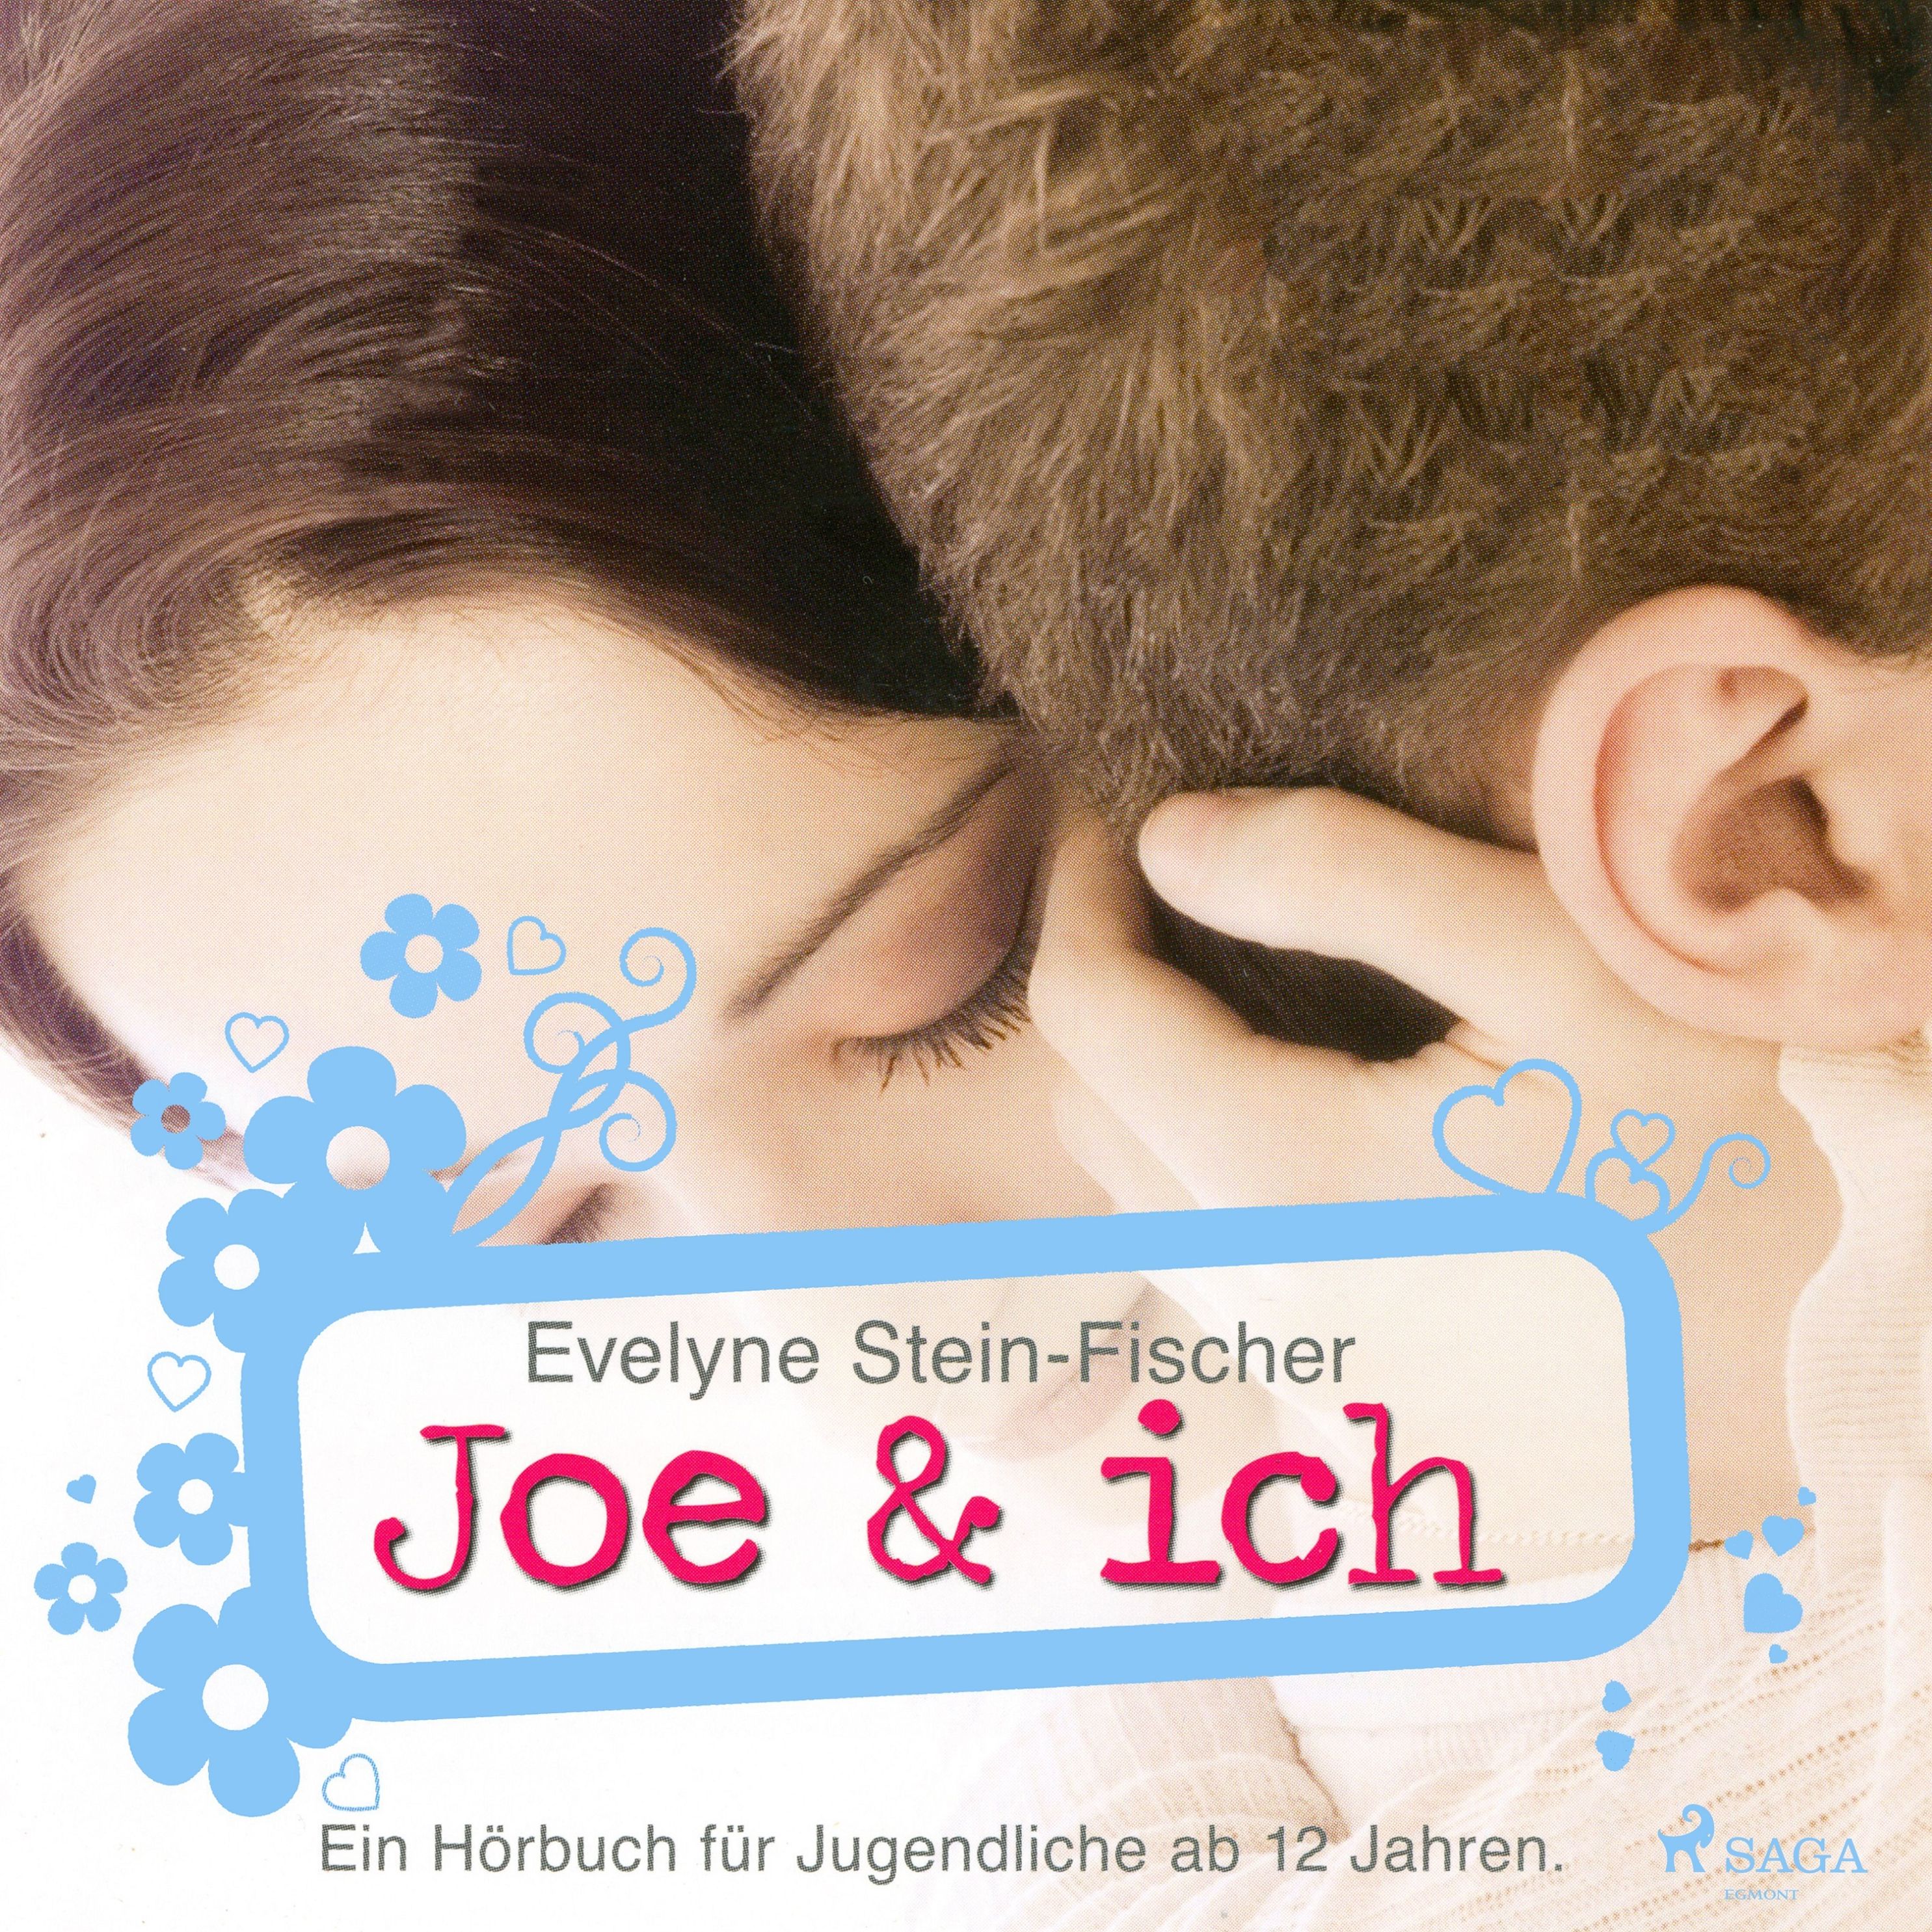 Joe & Ich Liebesroman Hörbuch sicher downloaden bei Weltbild.at